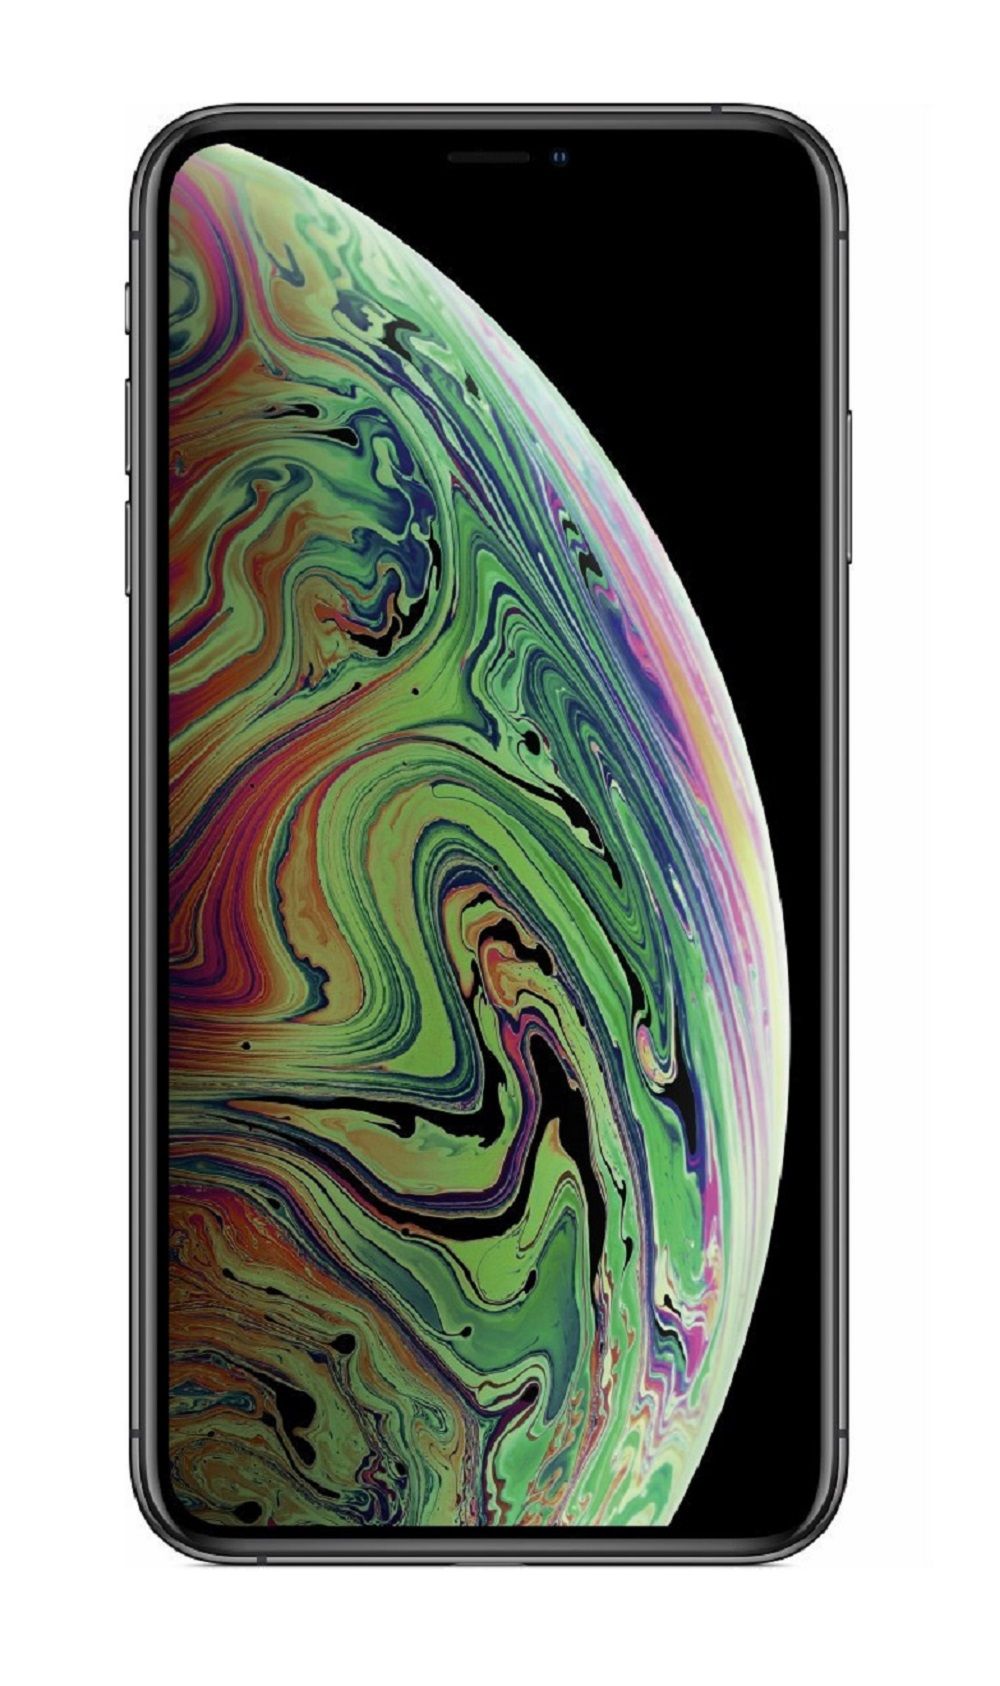 Apple iPhone XS Max 256GB Dual SIM (2 nano-SIM) - Space Gray